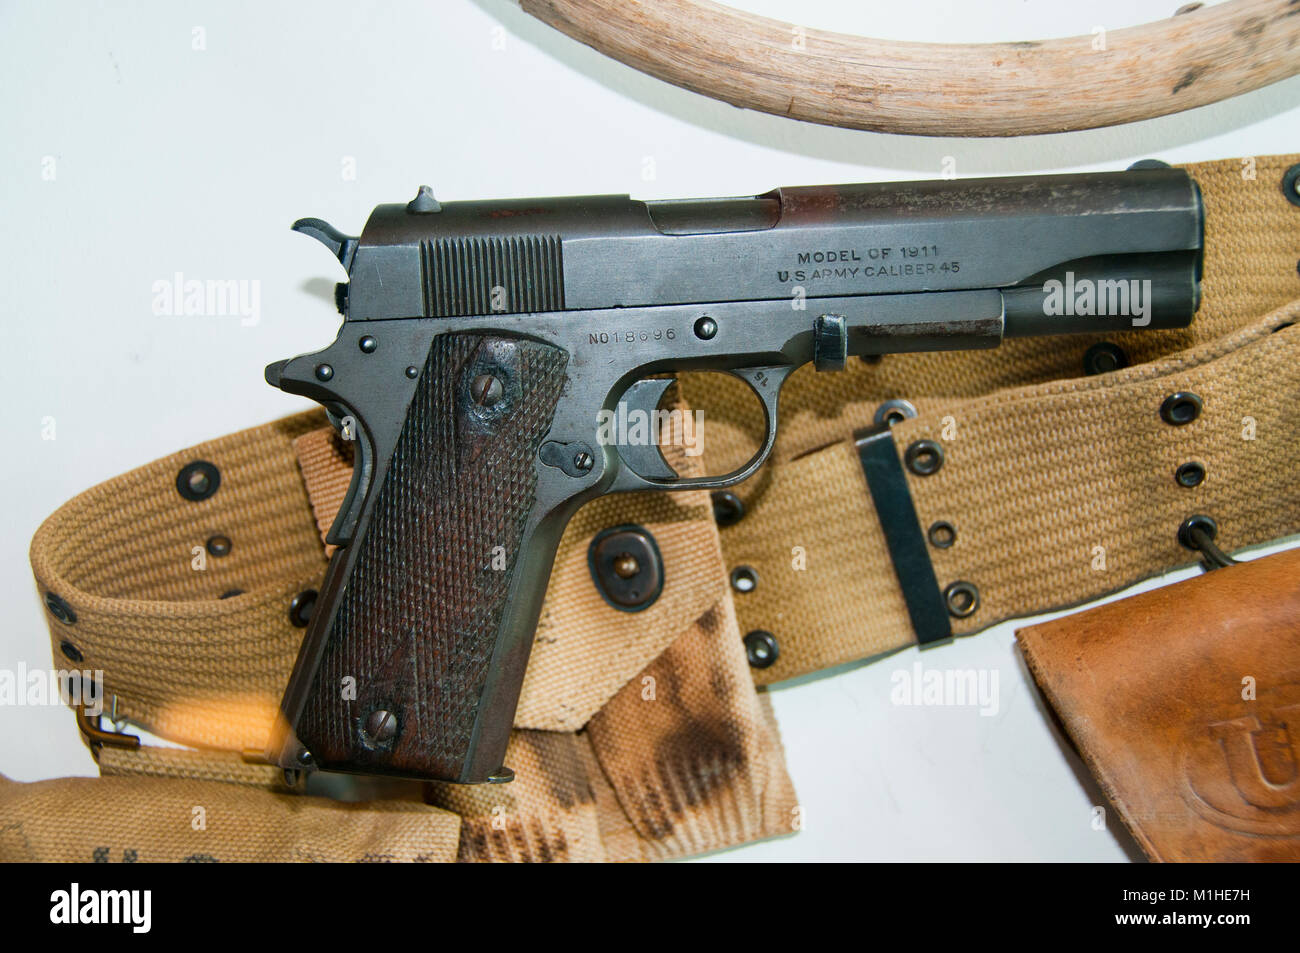 M1911 ,45 caliber colt 45 gun Stock Photo